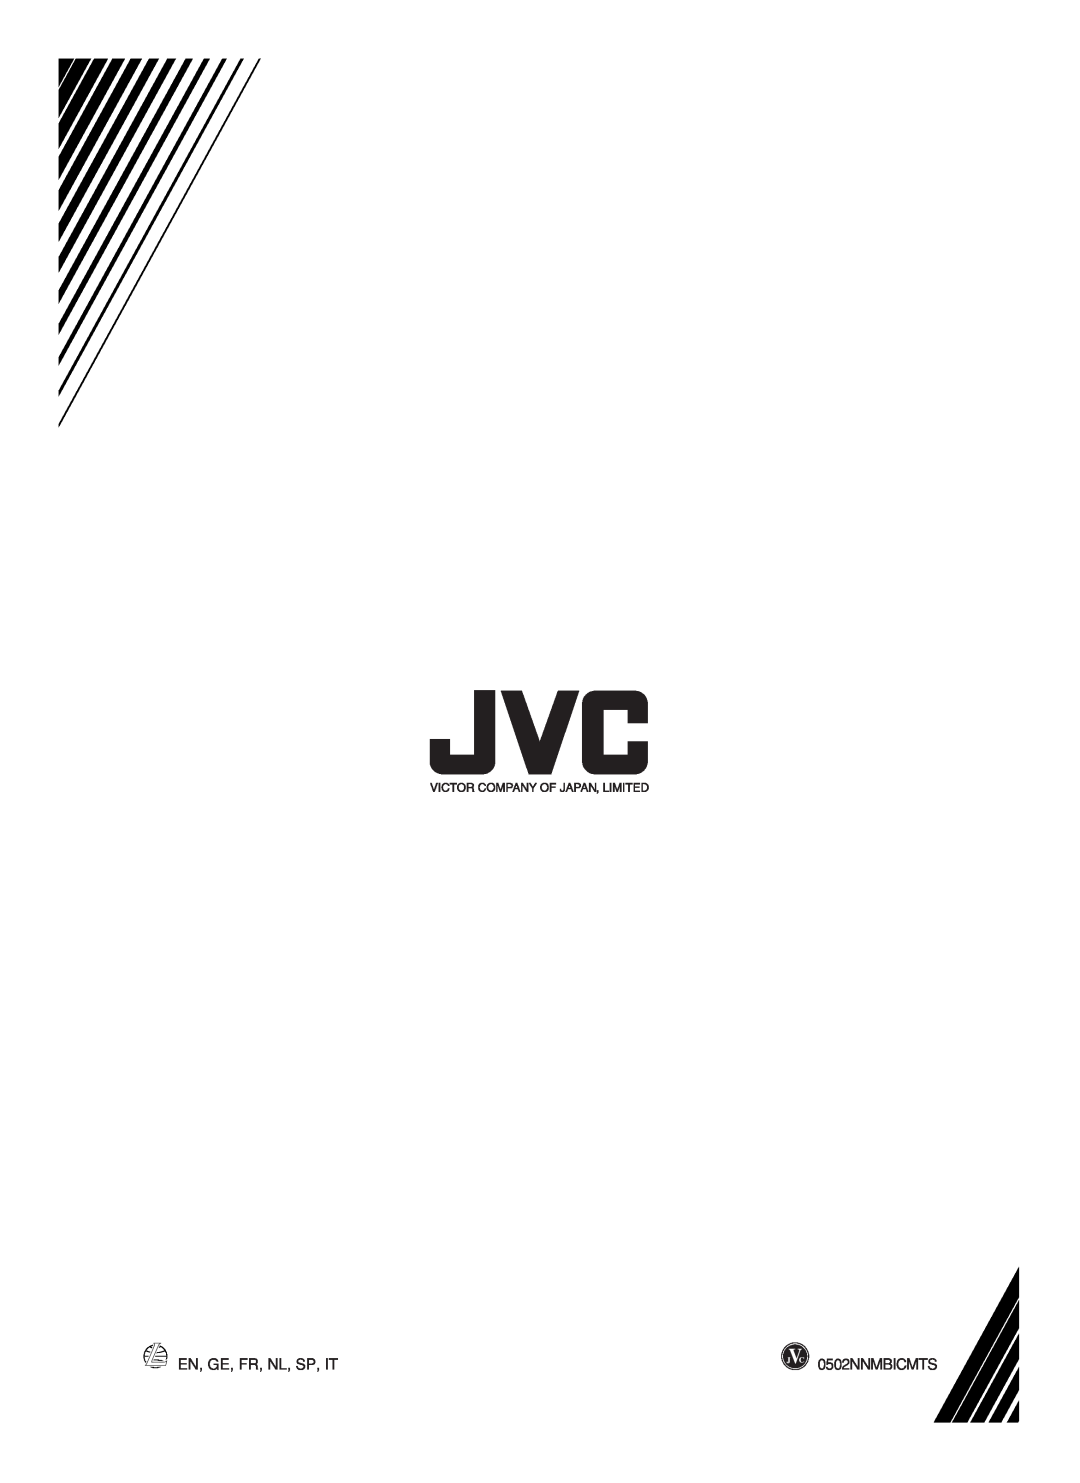 JVC RC-BX530SL manual En, Ge, Fr, Nl, Sp, It, 0502NNMBICMTS 